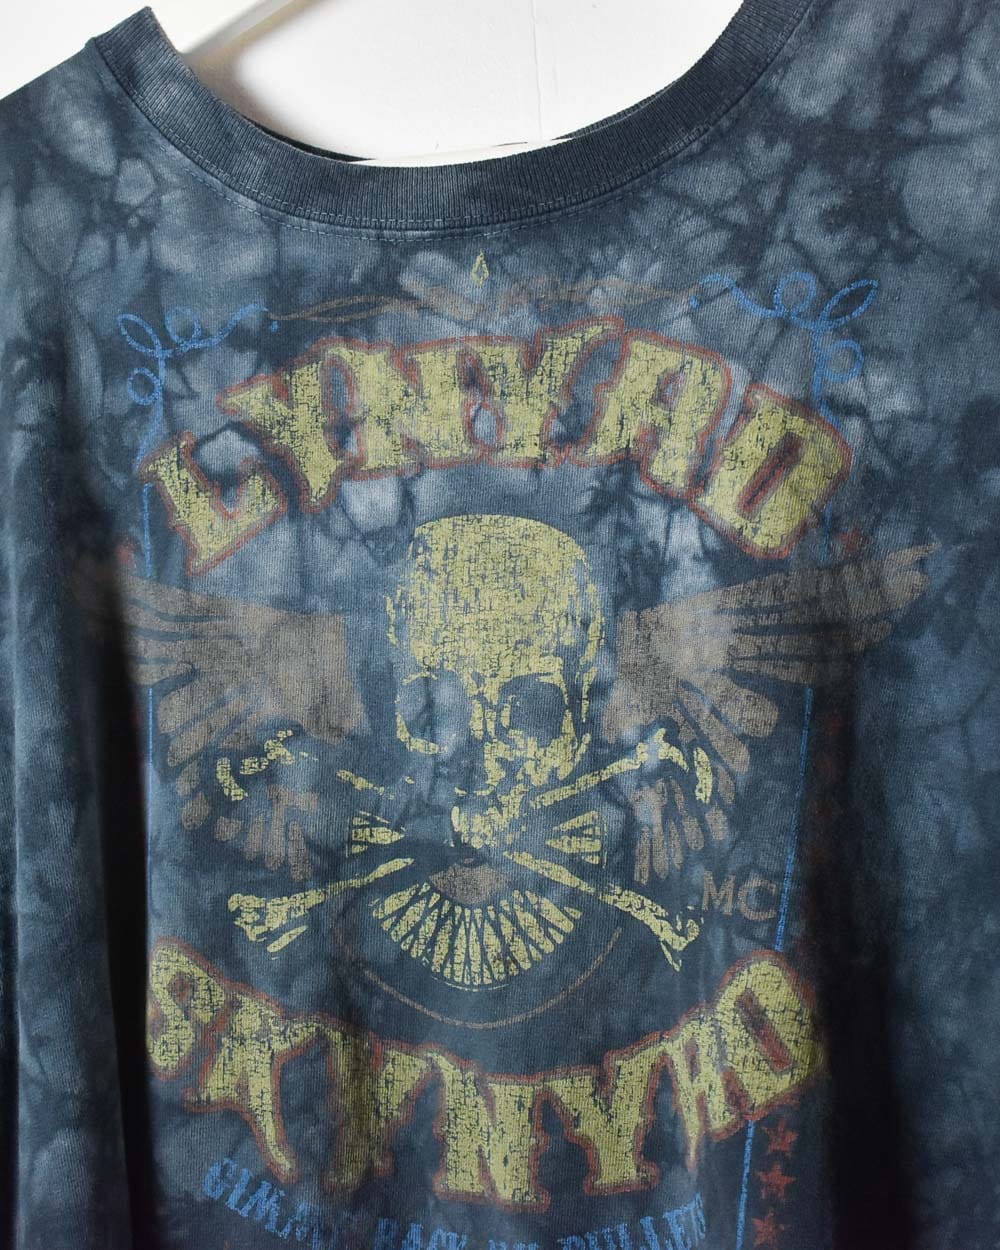 Navy Lynard Skynyrd Skull Graphic Washed T-Shirt - X-Large